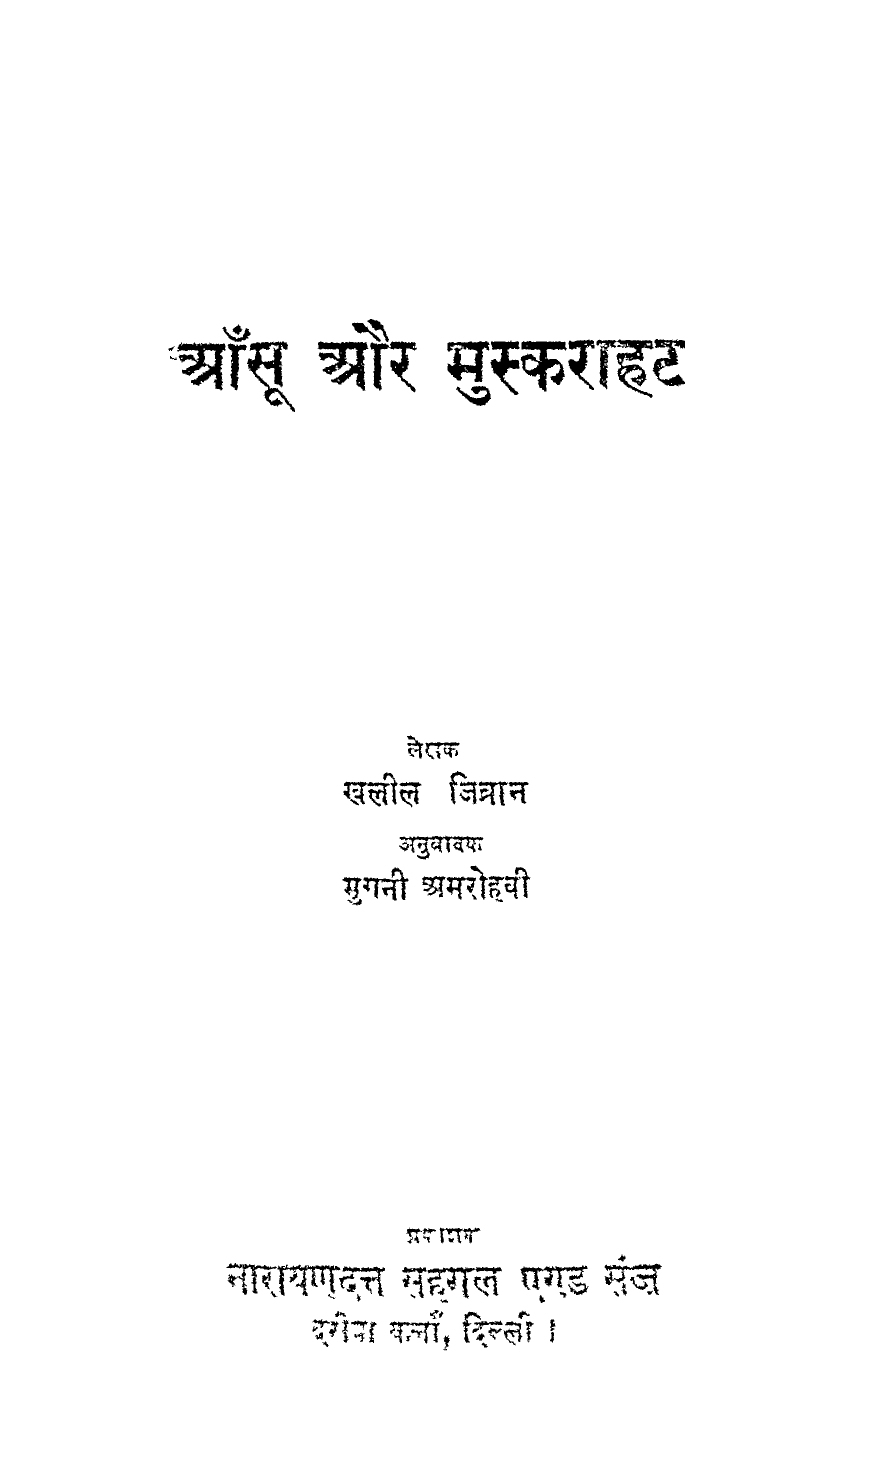 K. Gibran, Aansu Aur Muskarahat [A Tear and a Smile], Translated into Hindi, Delhi: Narayan Dutt Sahagal & Sons, 1959.